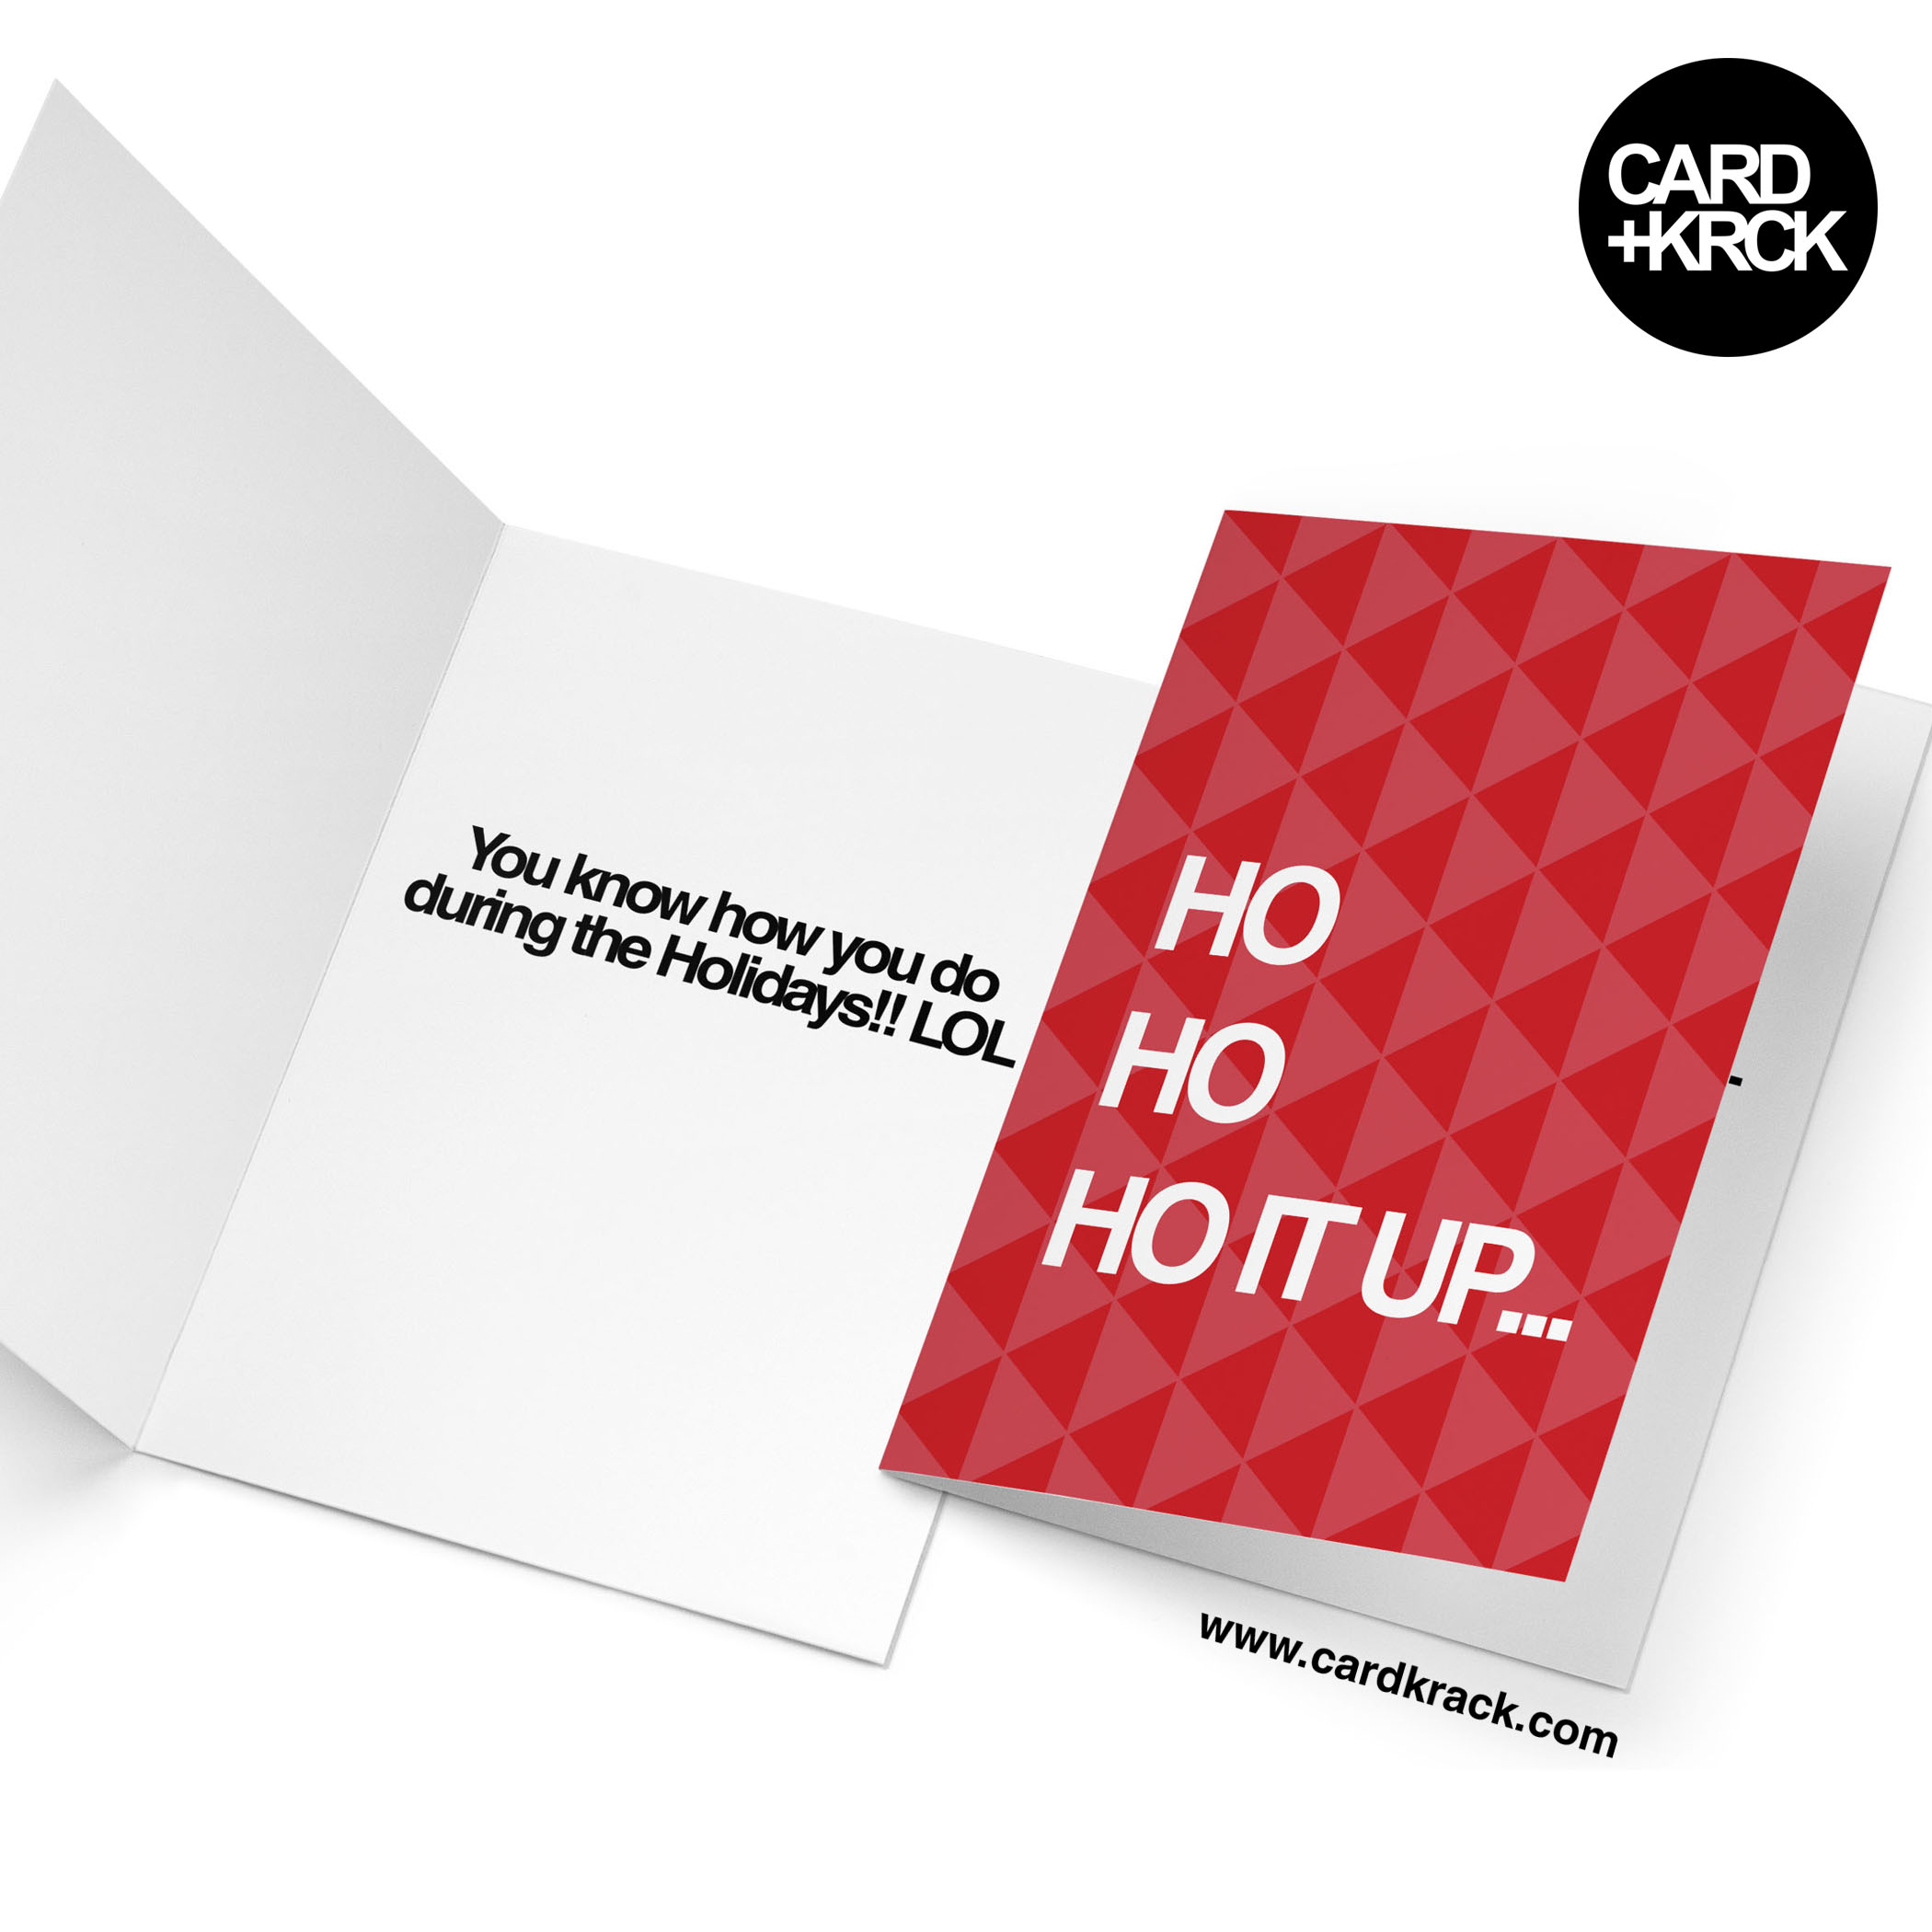 Card Template 2_Ho Ho Ho It Up.jpg